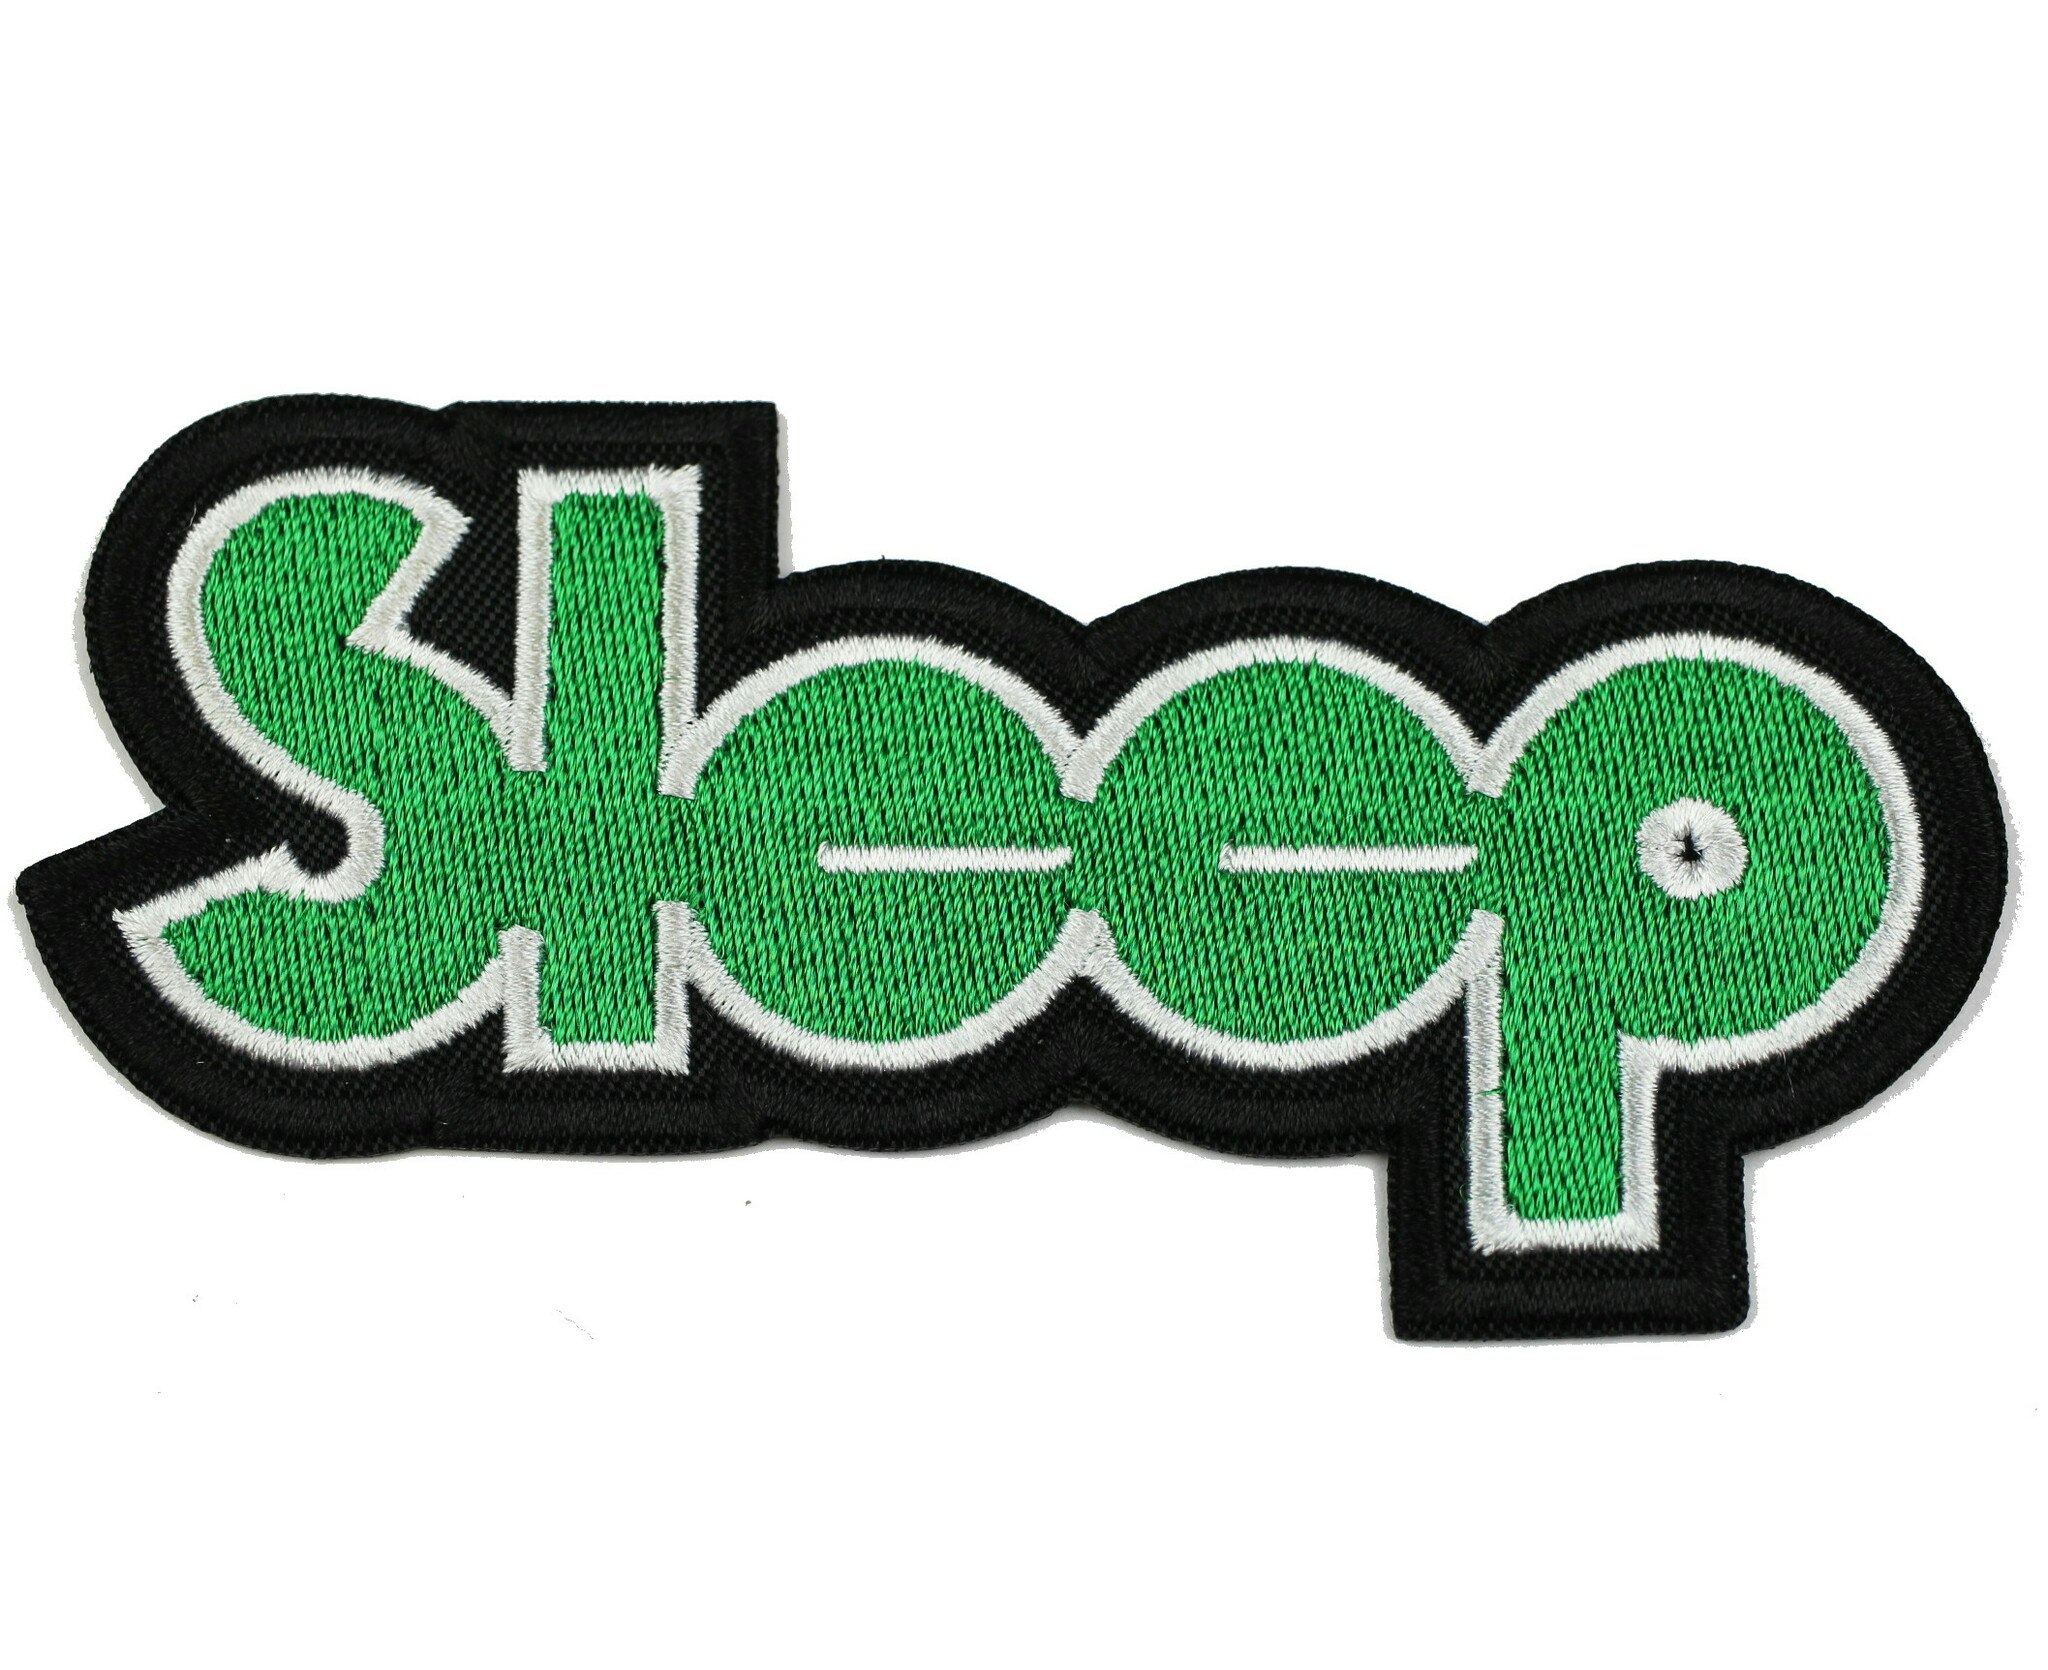 Sleep logo patch